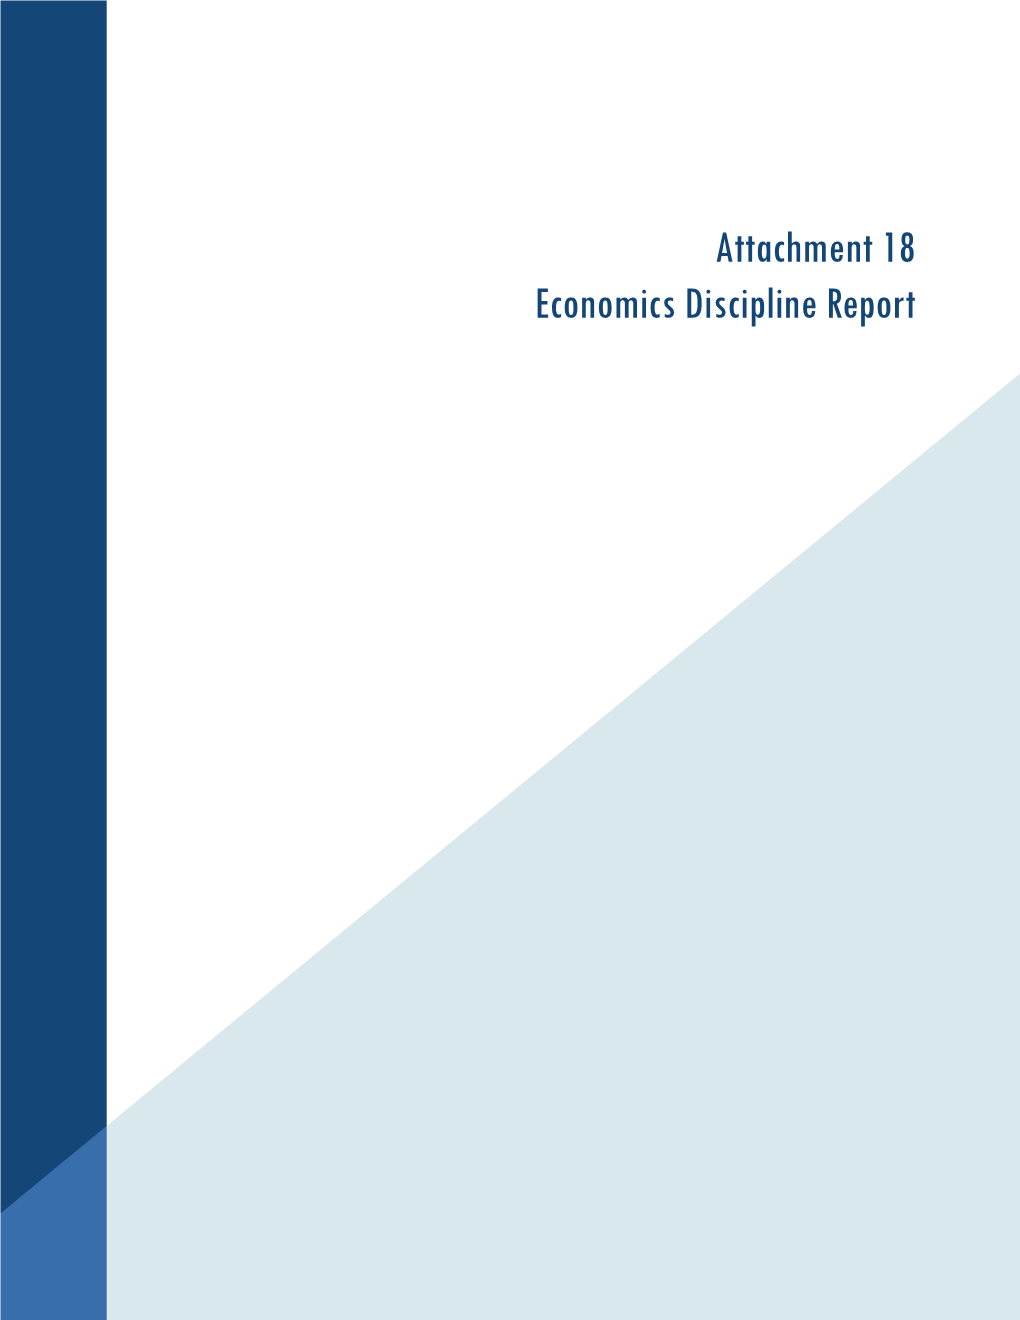 Attachment 18: Economics Discipline Report